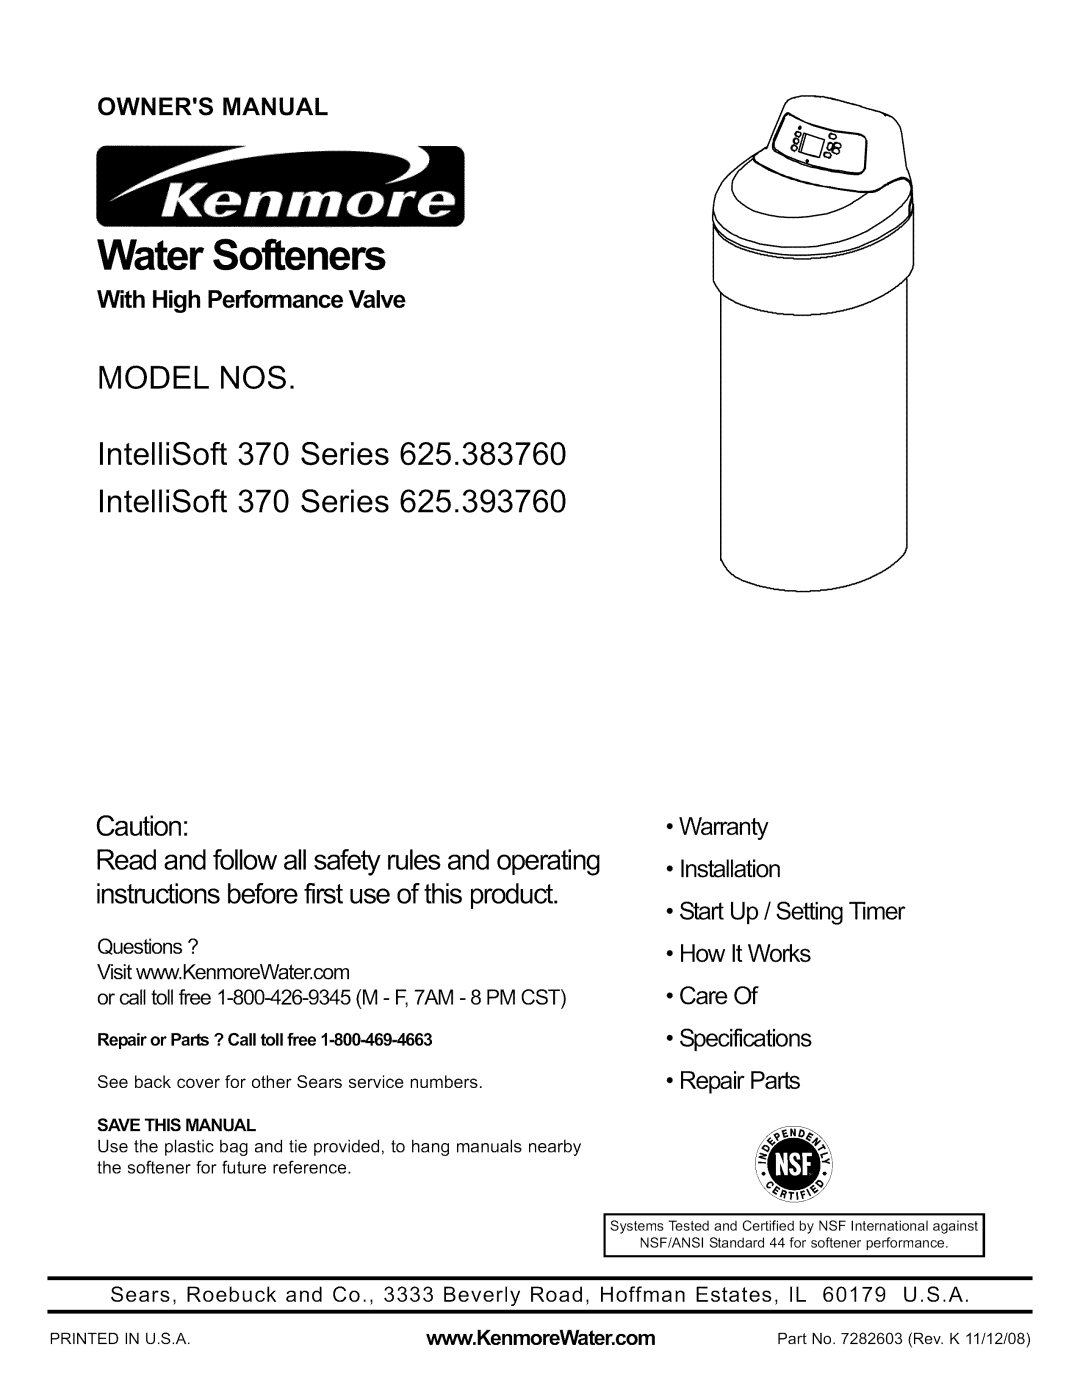 Kenmore 625.38376 owner manual MODEL NOS IntelliSoft 370 Series IntelliSoft 370 Series, Owners Manual, Water Softeners 